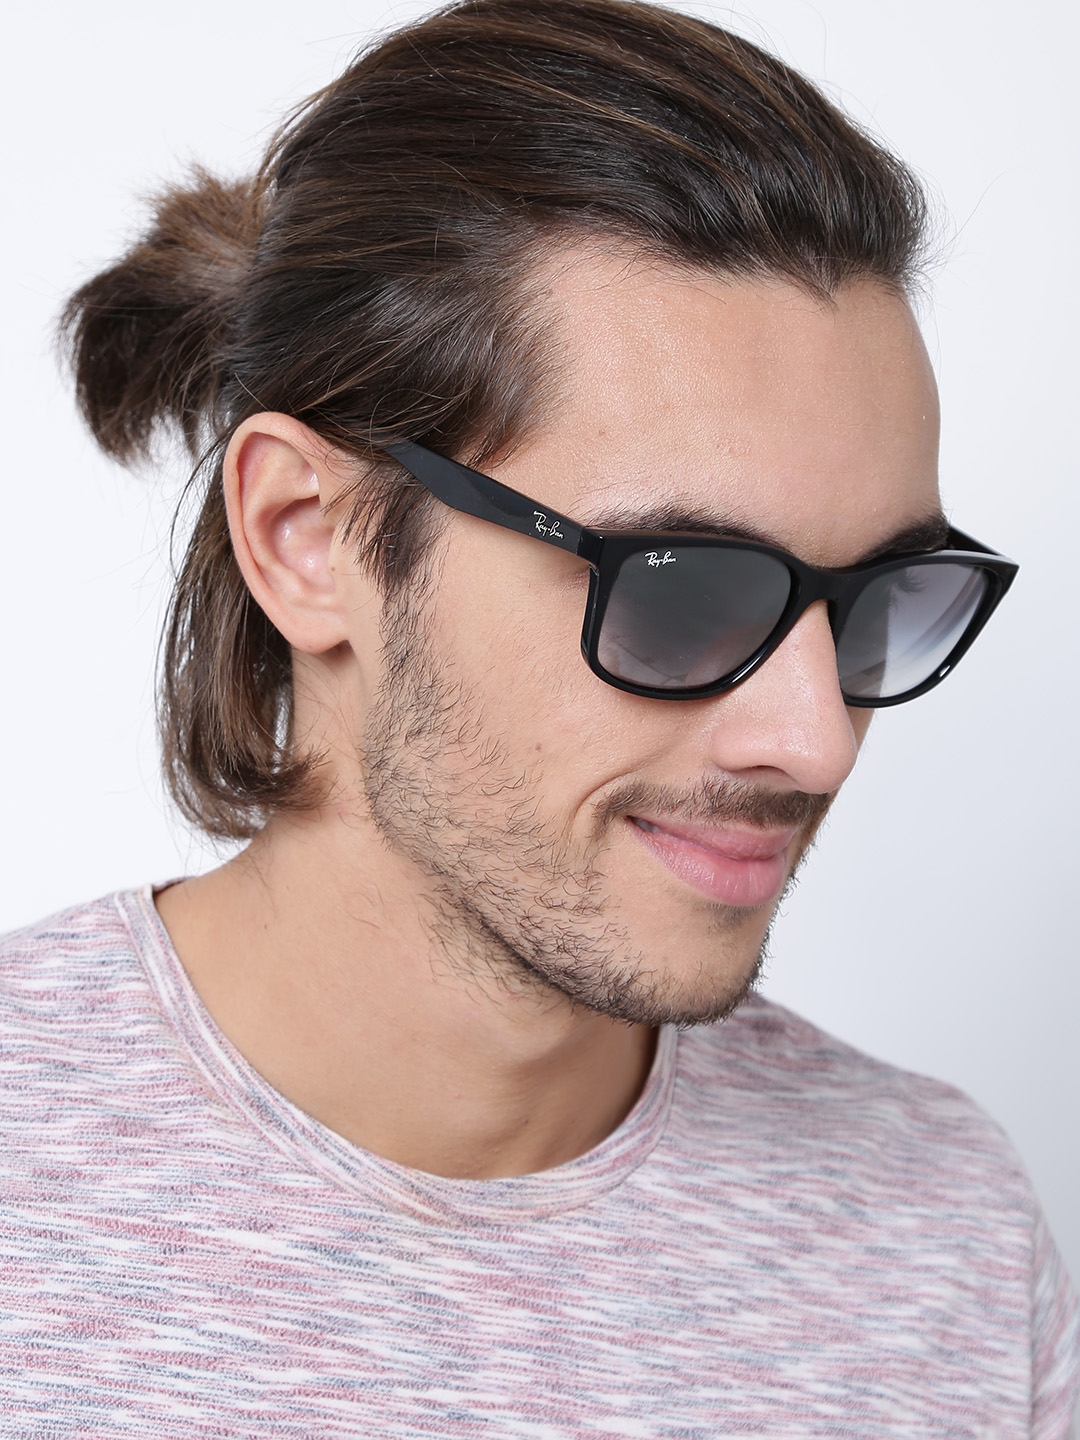 Display more than 166 ray ban sunglasses men latest